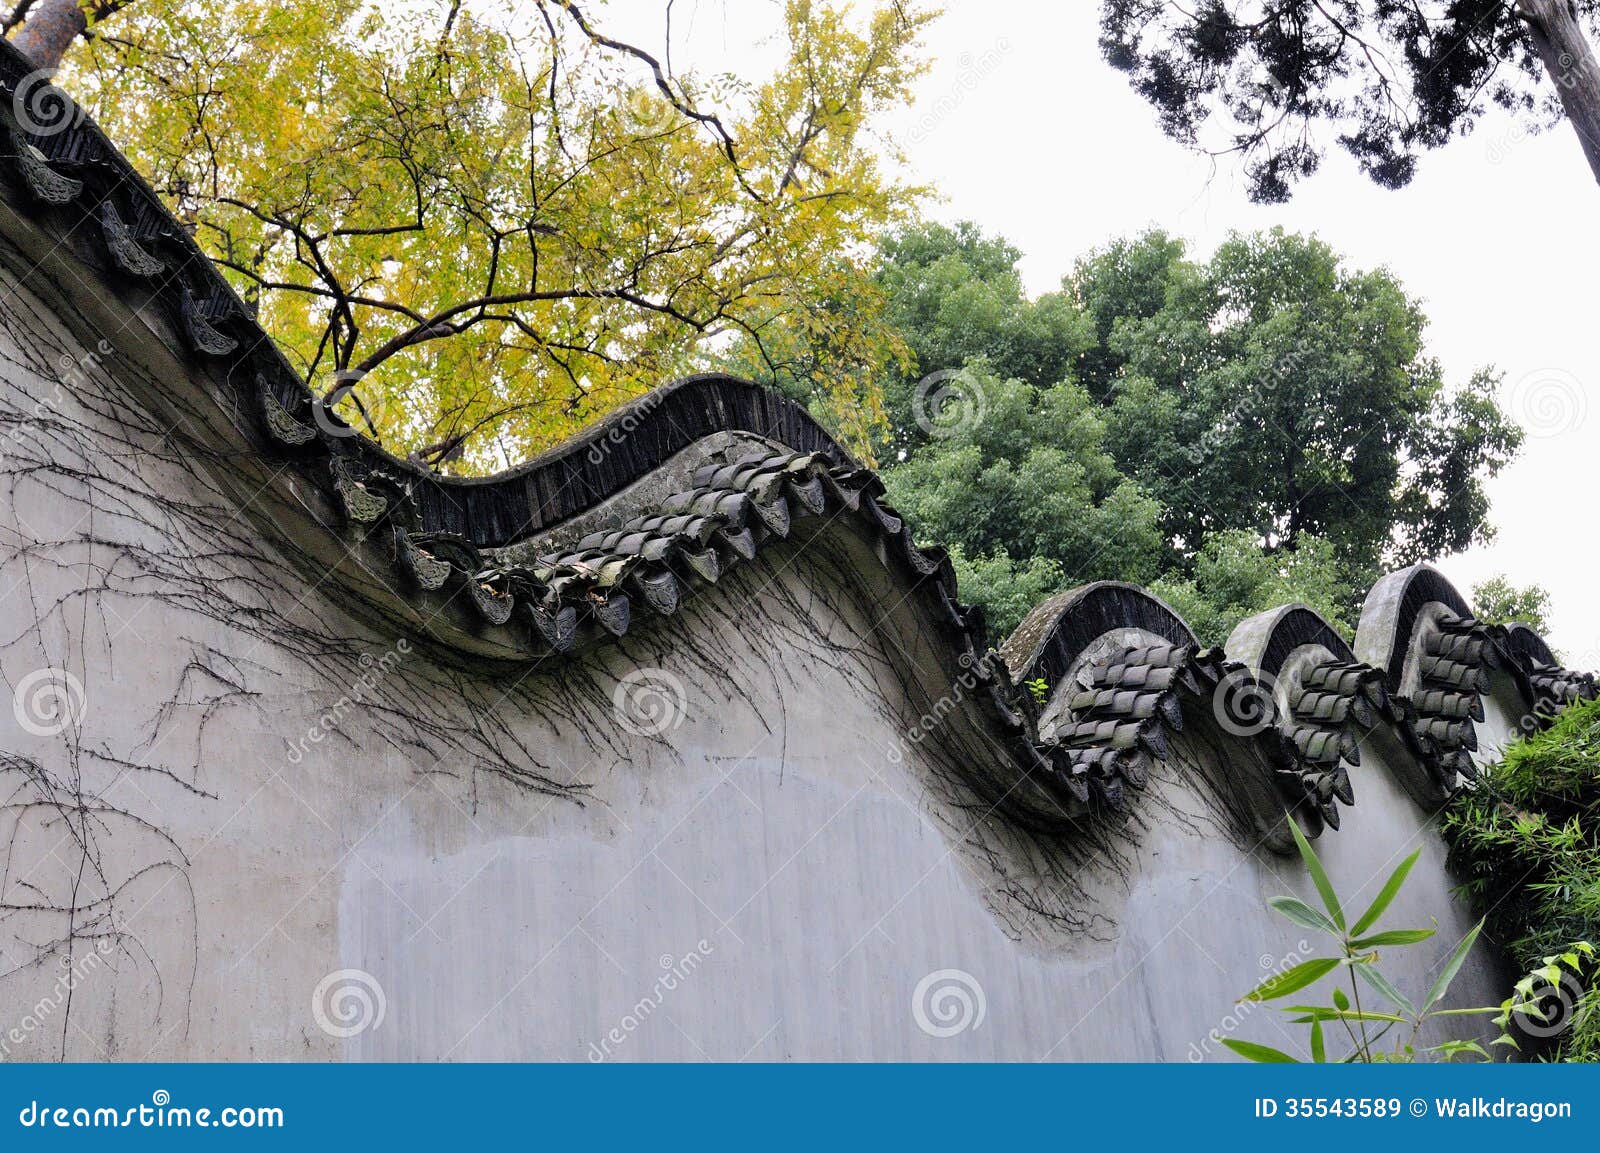 Lingering garden in suzhou stock image. Image of design - 35543589